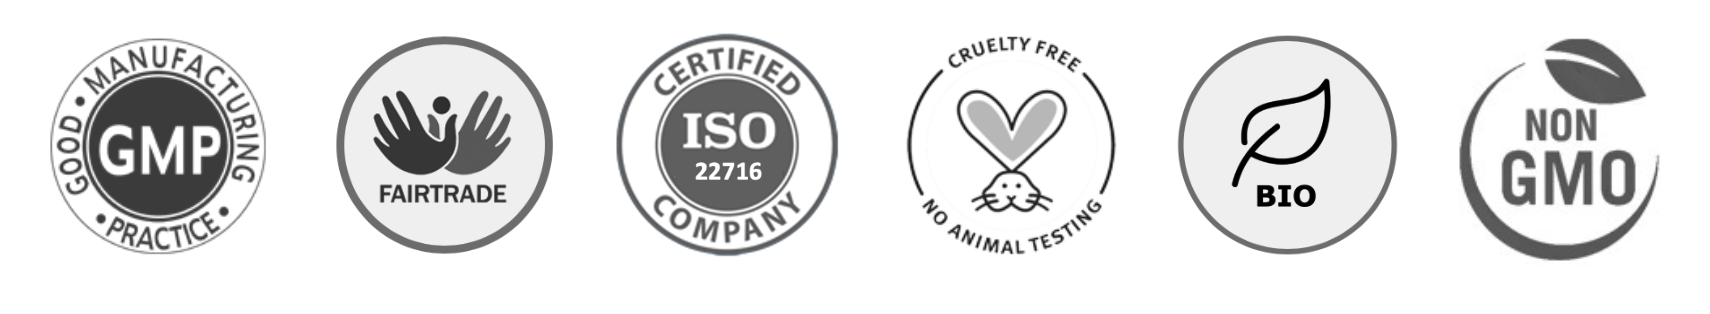 PhytoVero icons: GMP, Fairtrade, ISO22716, cruelty free, organic and non GMO